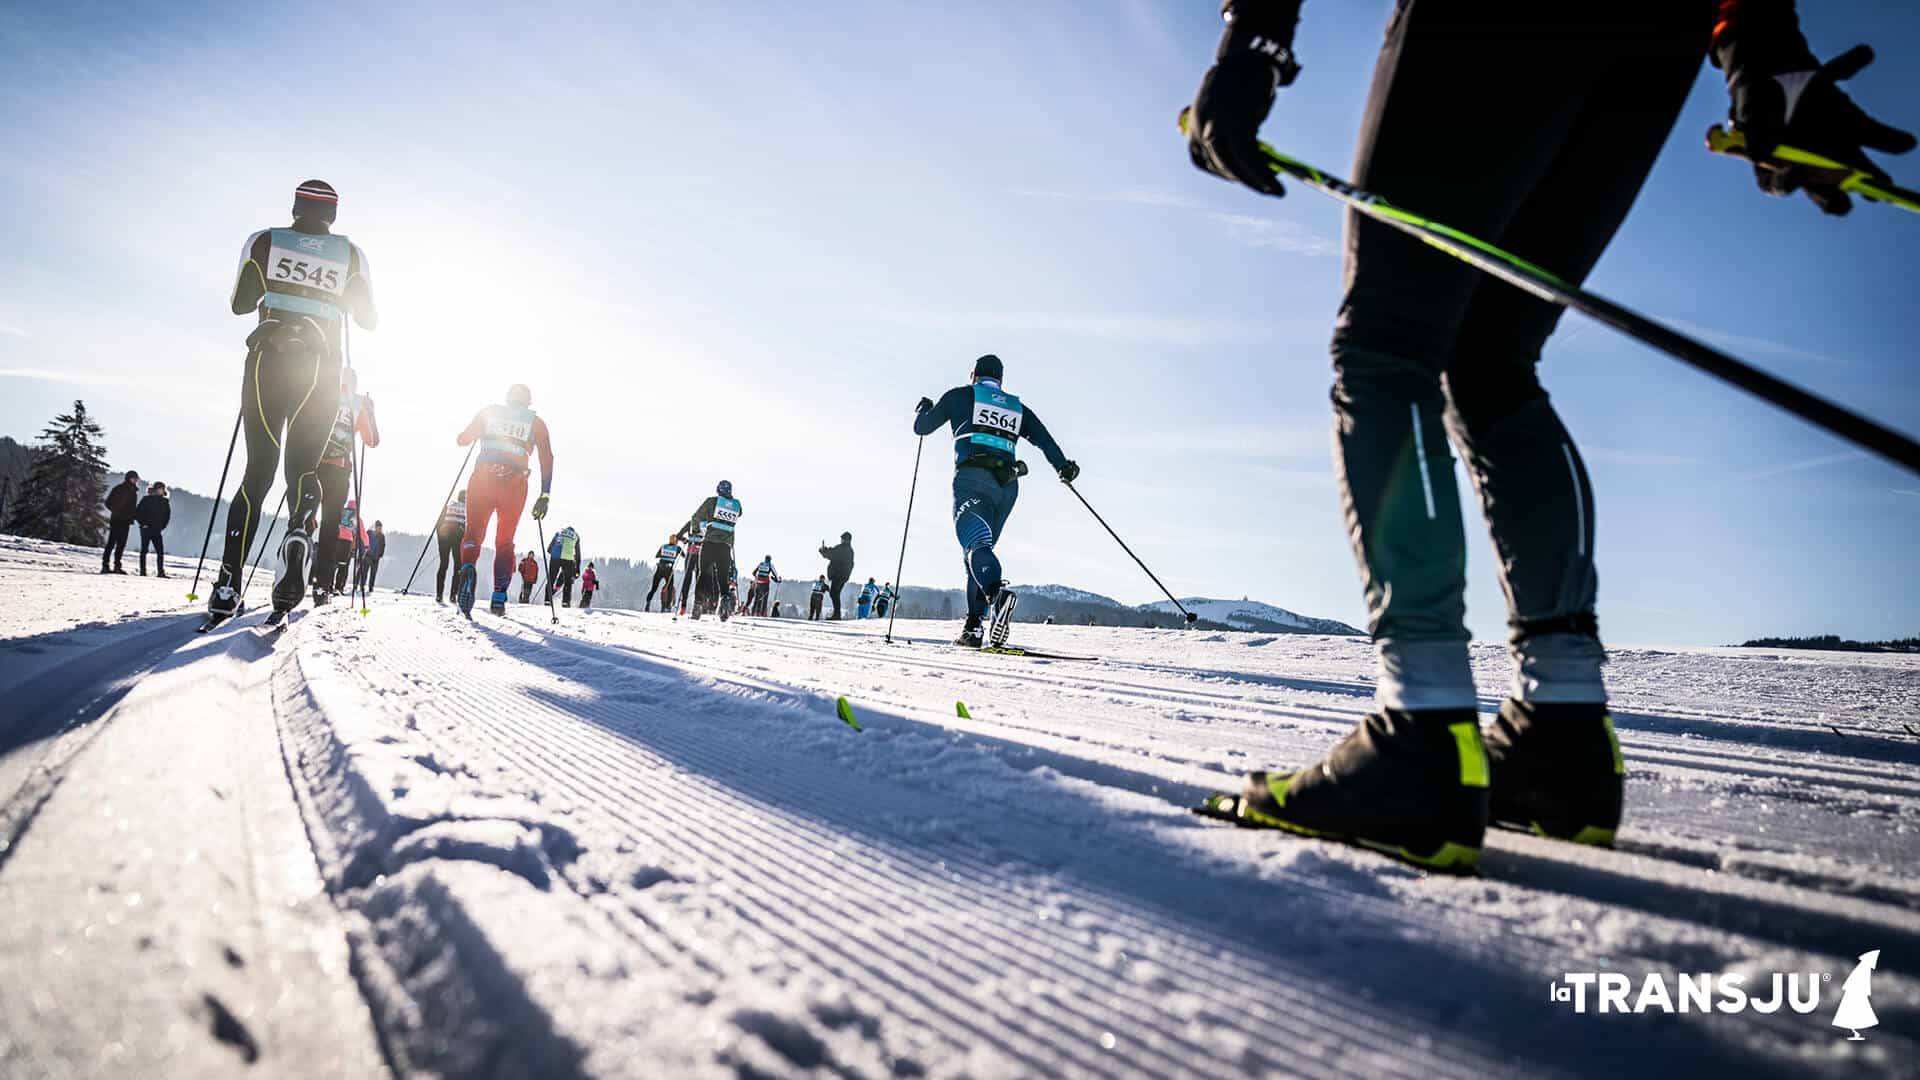 La Transju - Classic and skating cross-country ski race in France